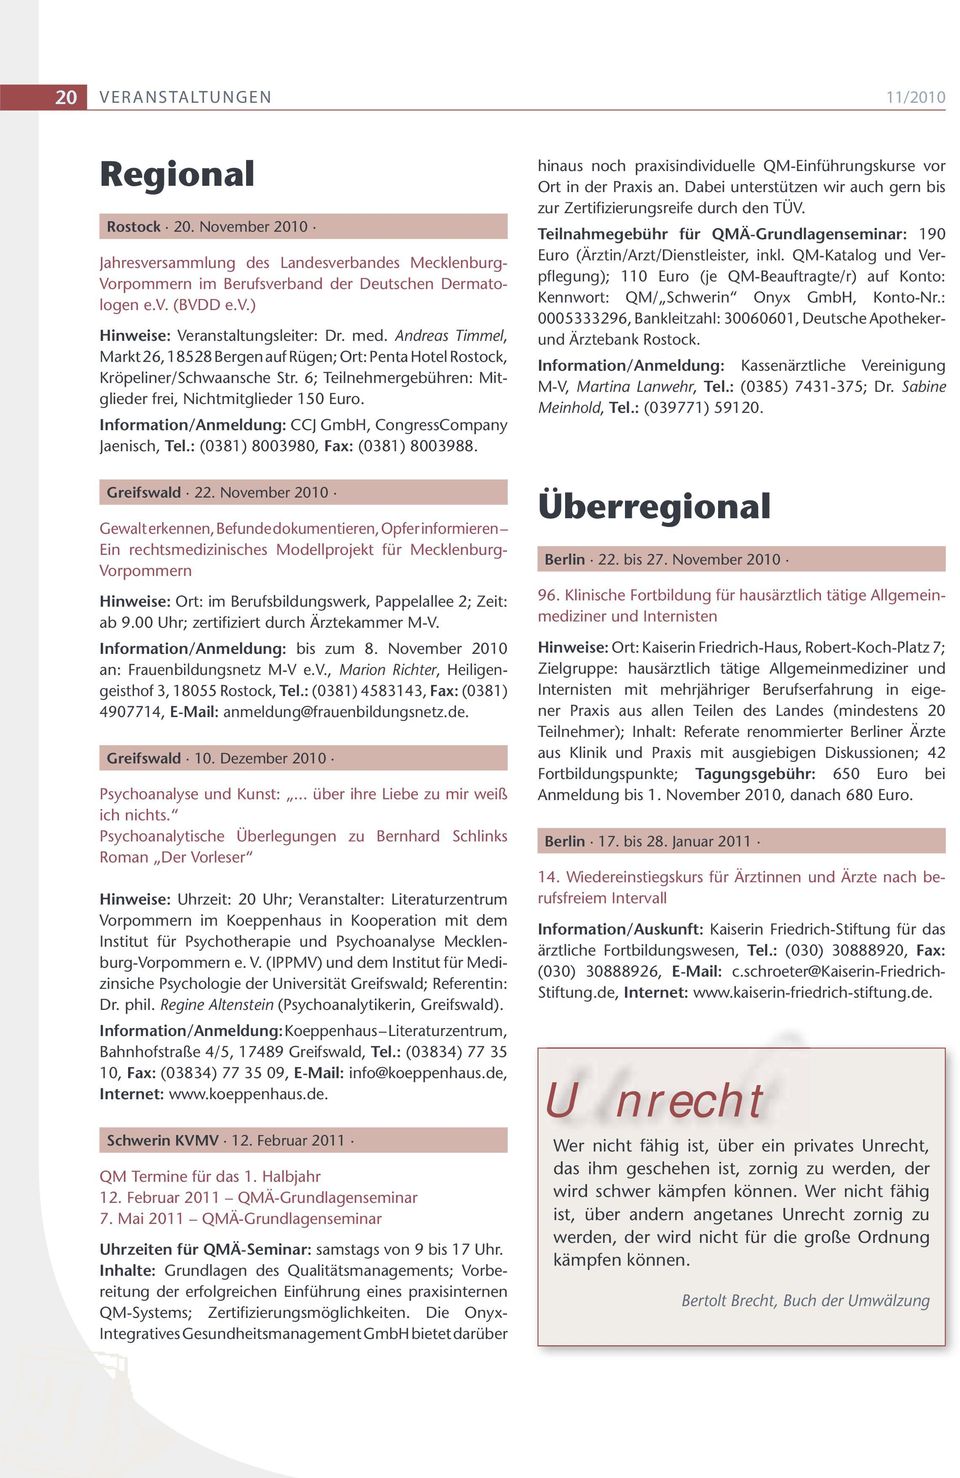 Information/Anmeldung: CCJ GmbH, CongressCompany Jaenisch, Tel.: (0381) 8003980, Fax: (0381) 8003988. Greifswald 22.